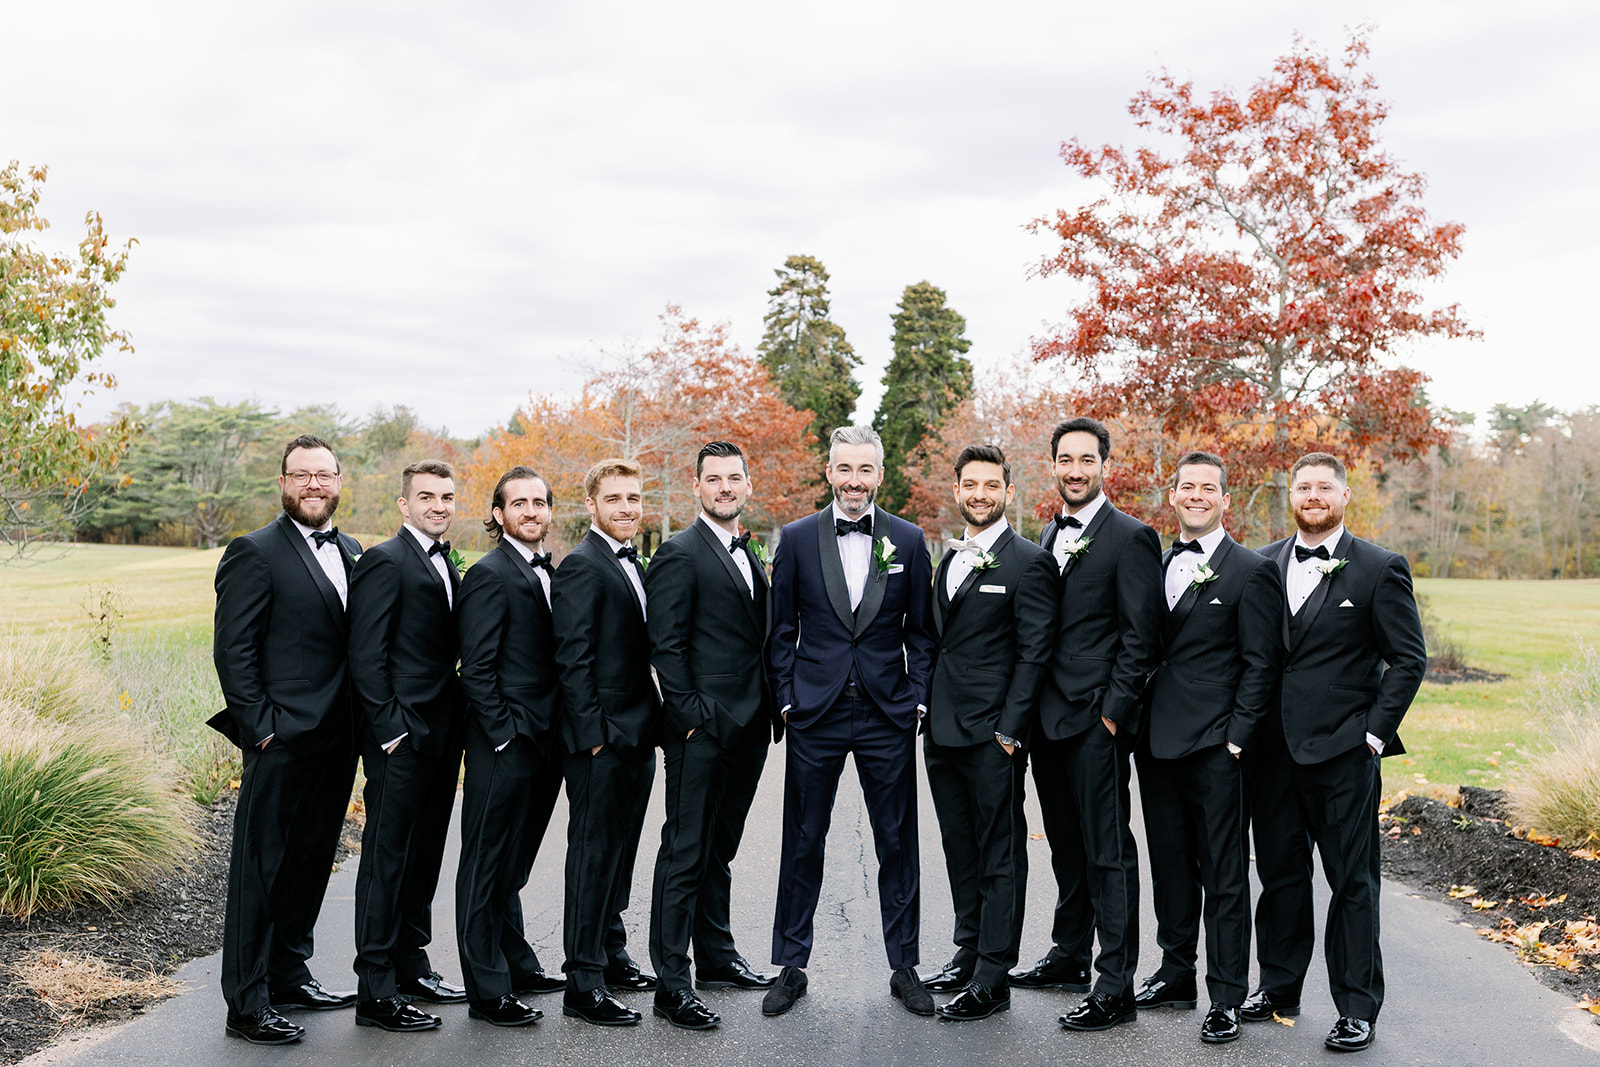 All black groom and groomsmen group photo.